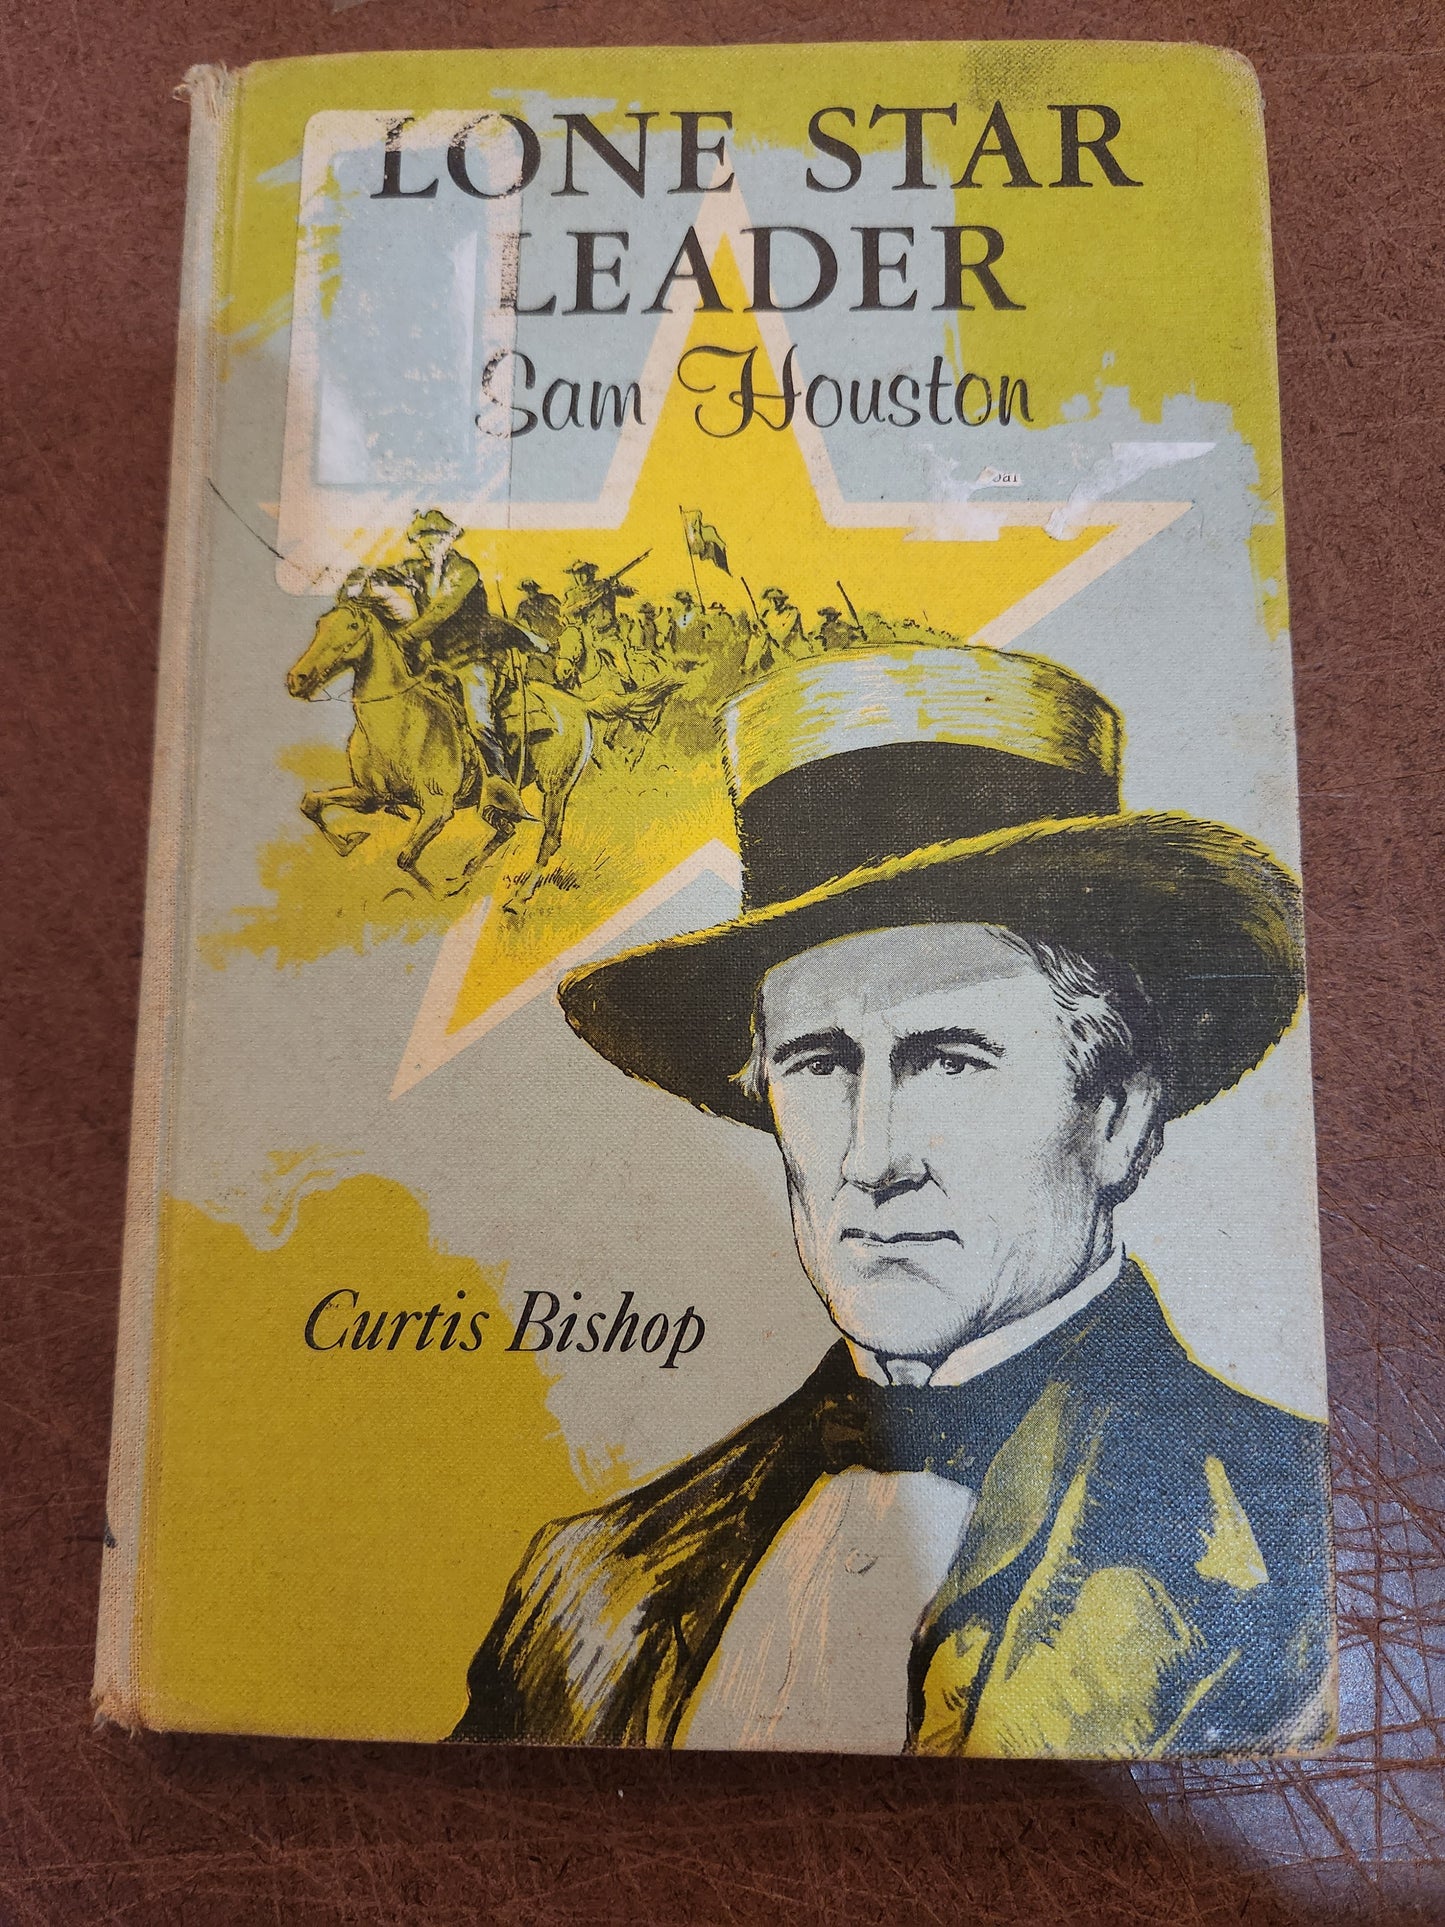 Lone Star Leader, Sam Houston. By Curtis Bishop